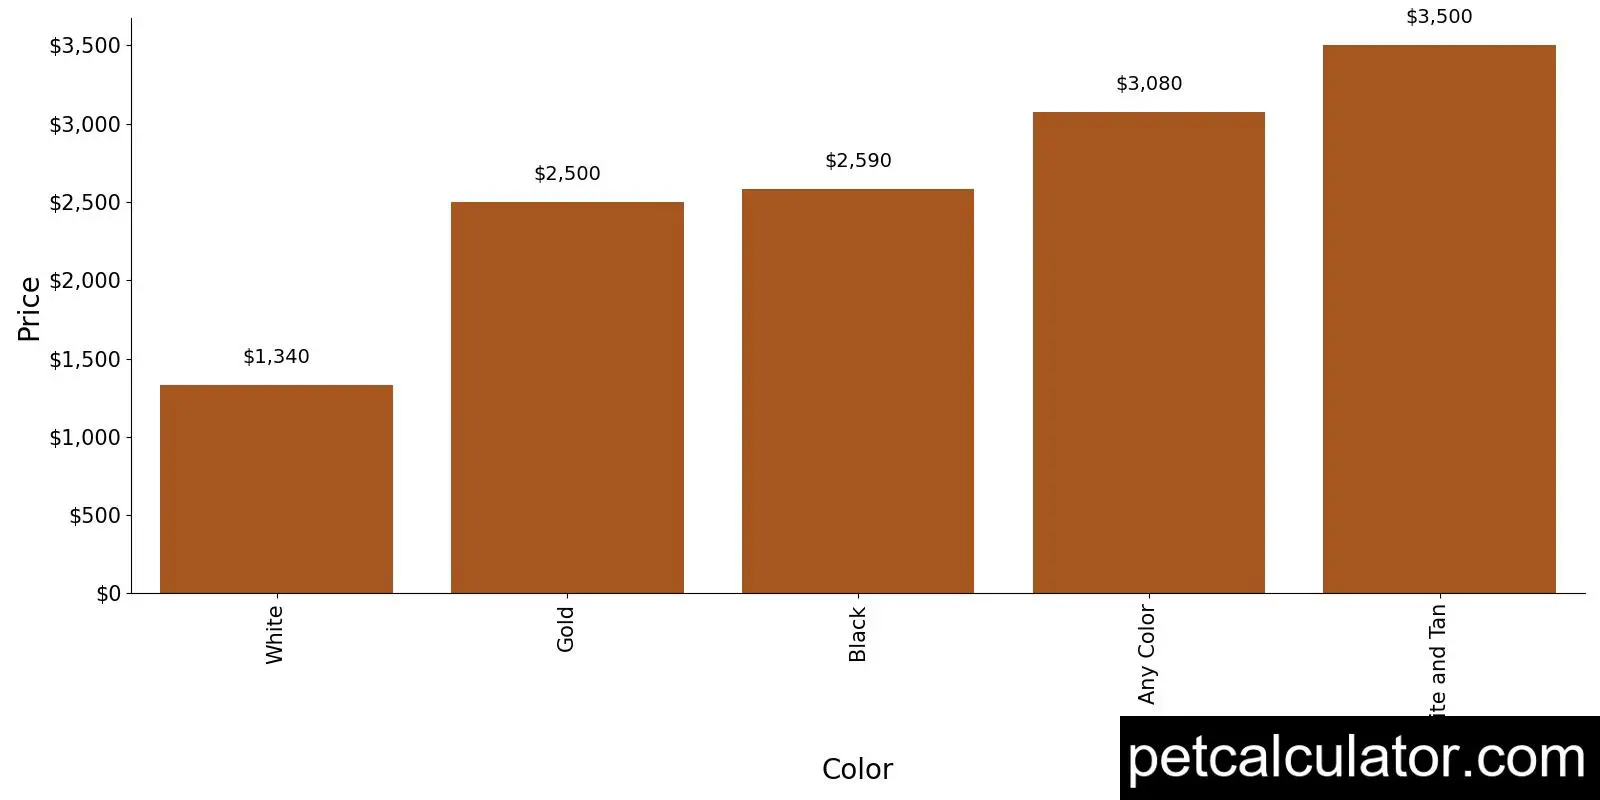 Price of Tibetan Mastiff by Color 